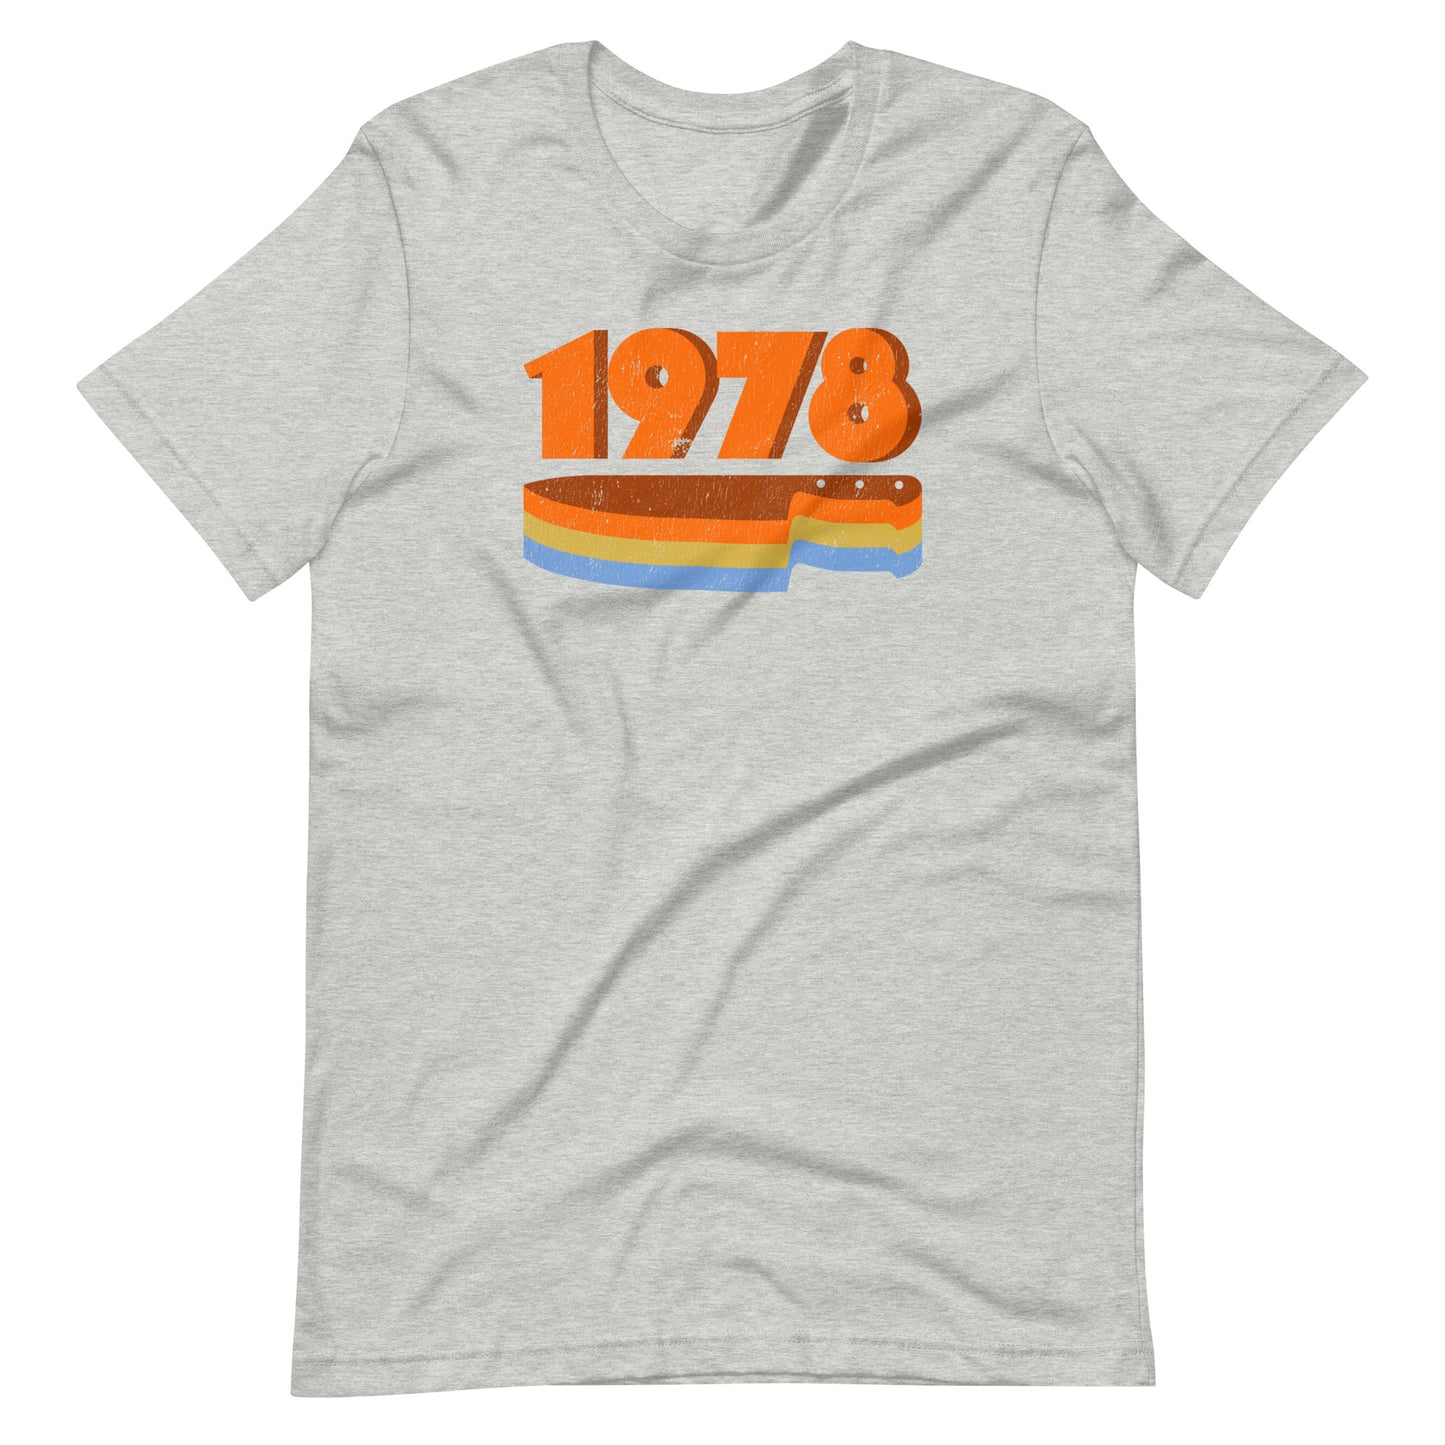 October 31st 1978 t-shirt